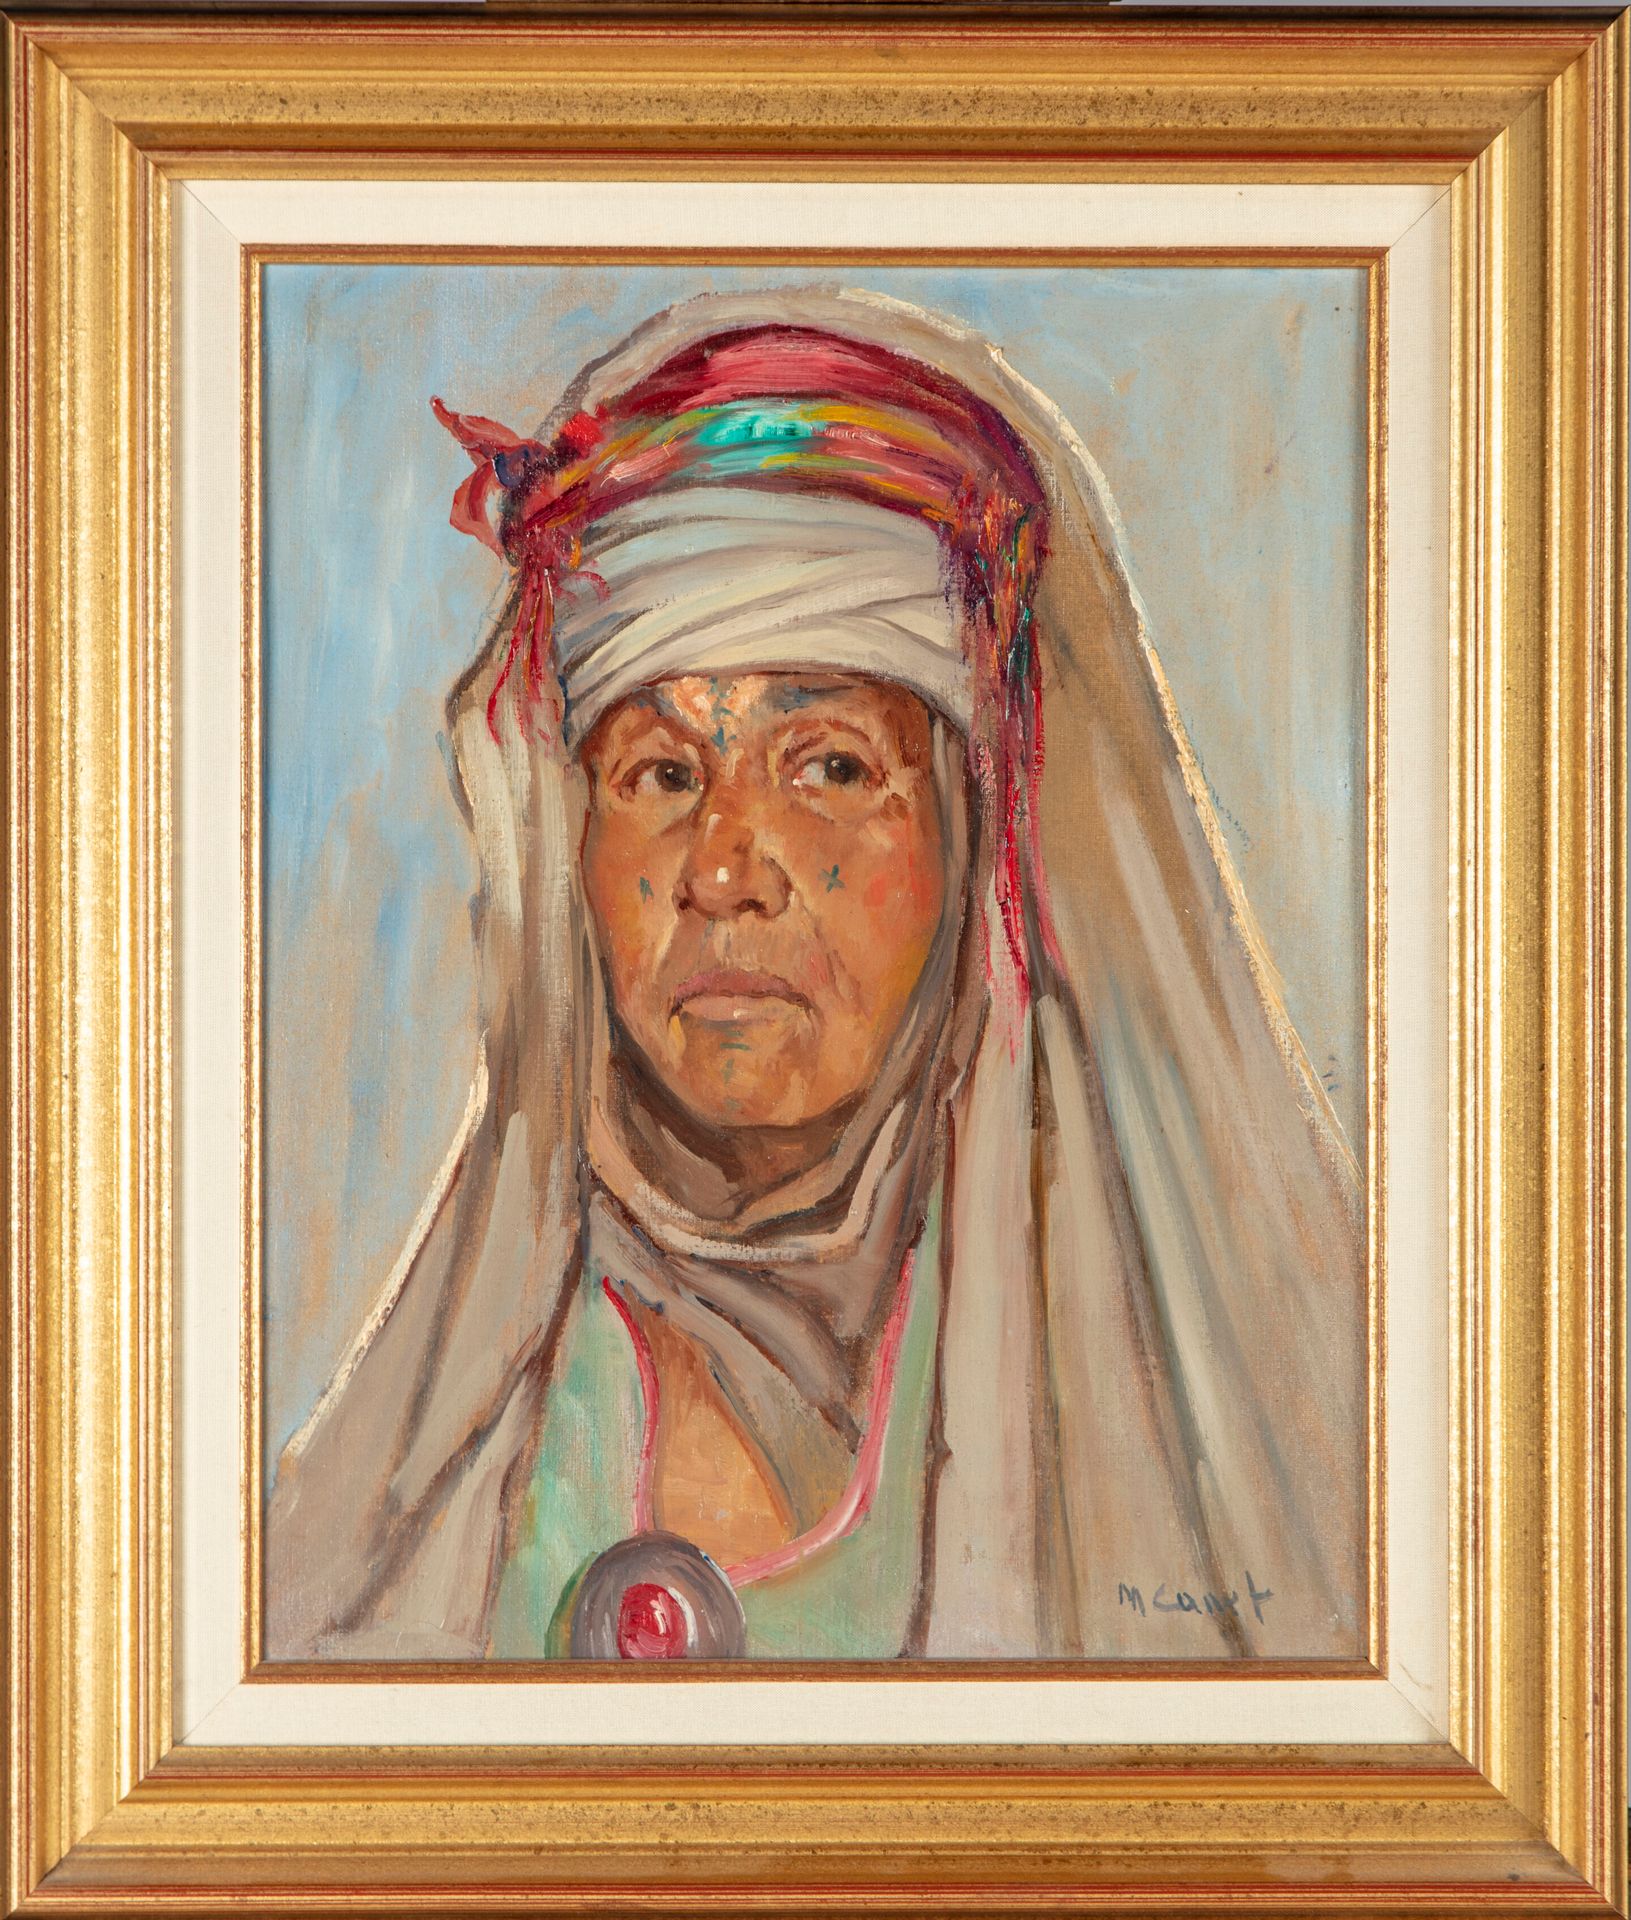 Null Marcel CANET (1875-1959)

Retrato de una mujer bereber

Óleo sobre lienzo m&hellip;